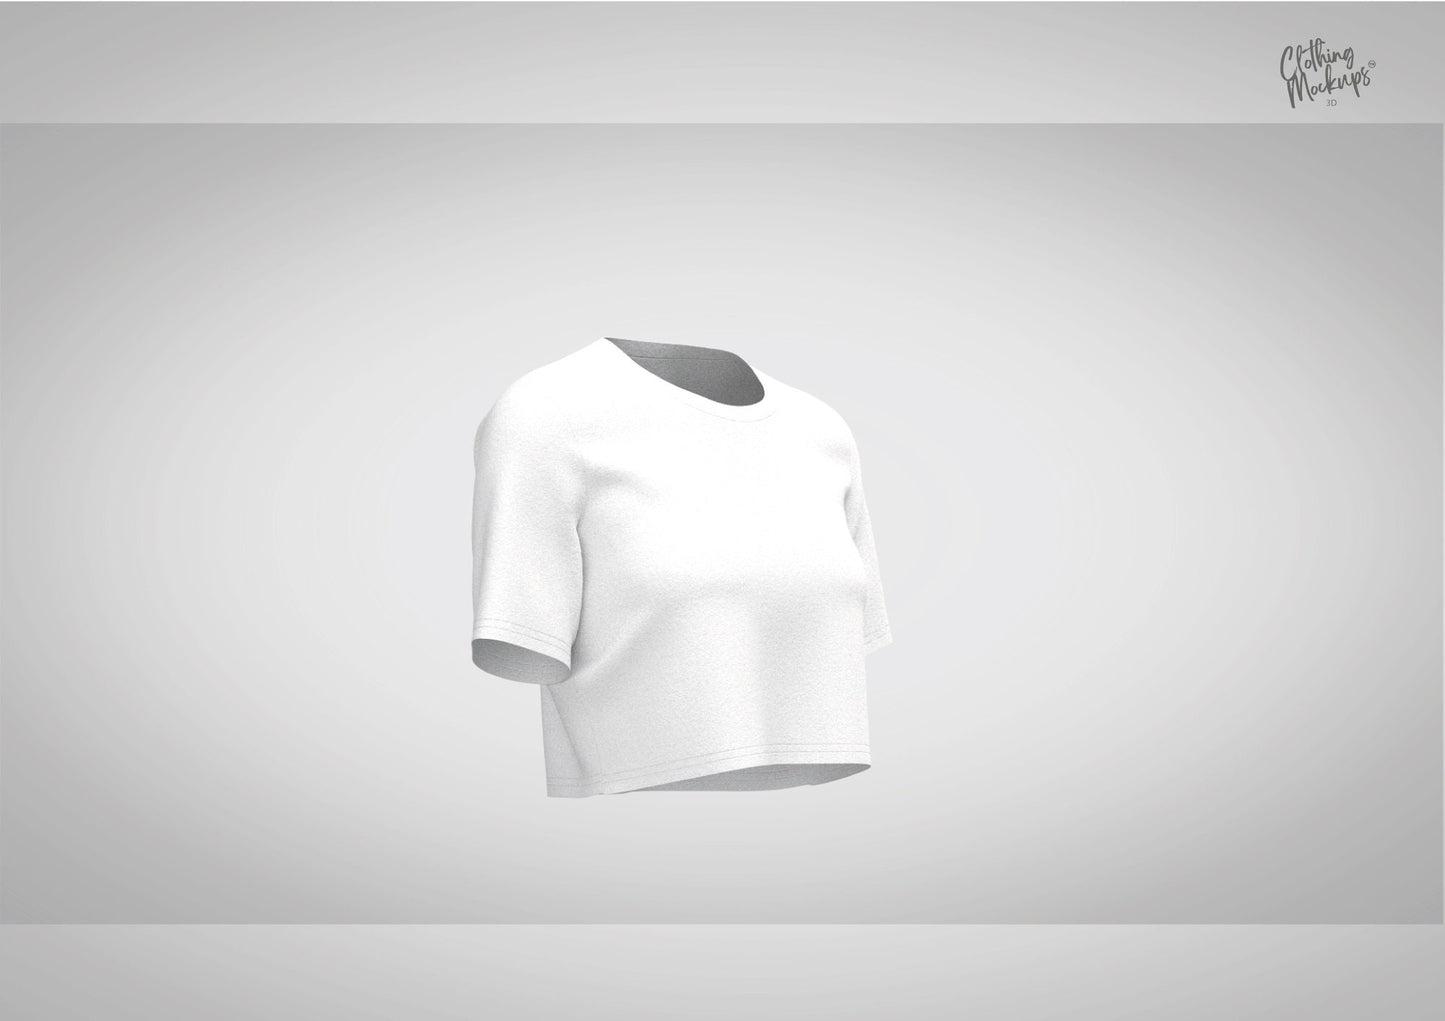 3D Model Cropped T-shirt